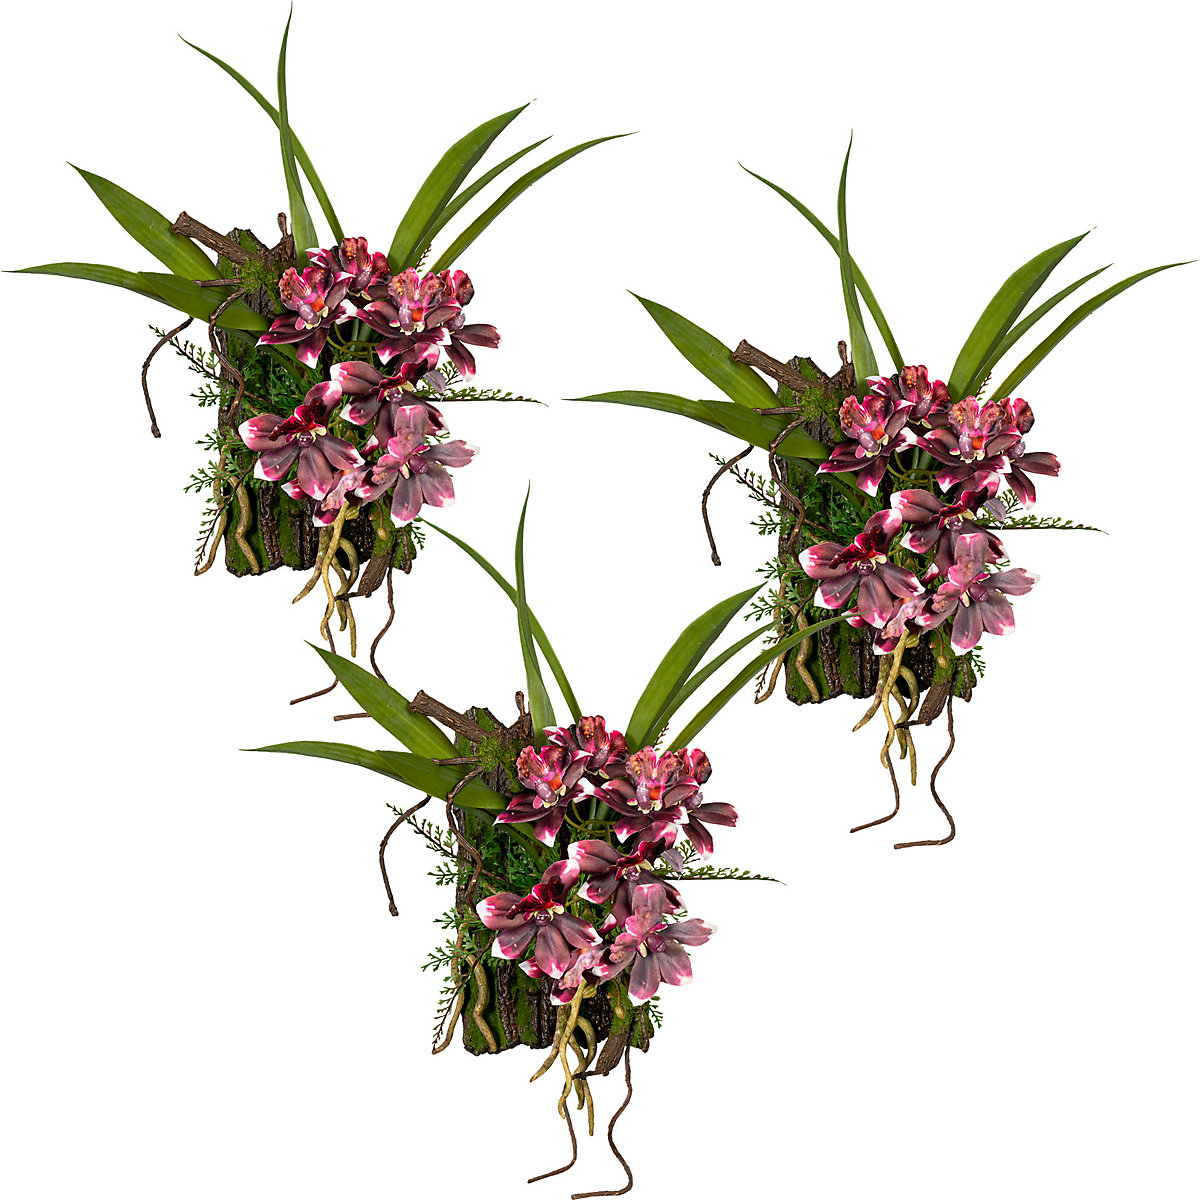 Dendrobium sobre casca, embalagem de 3 unid., aprox. 400 x 300 mm, bordeaux/creme